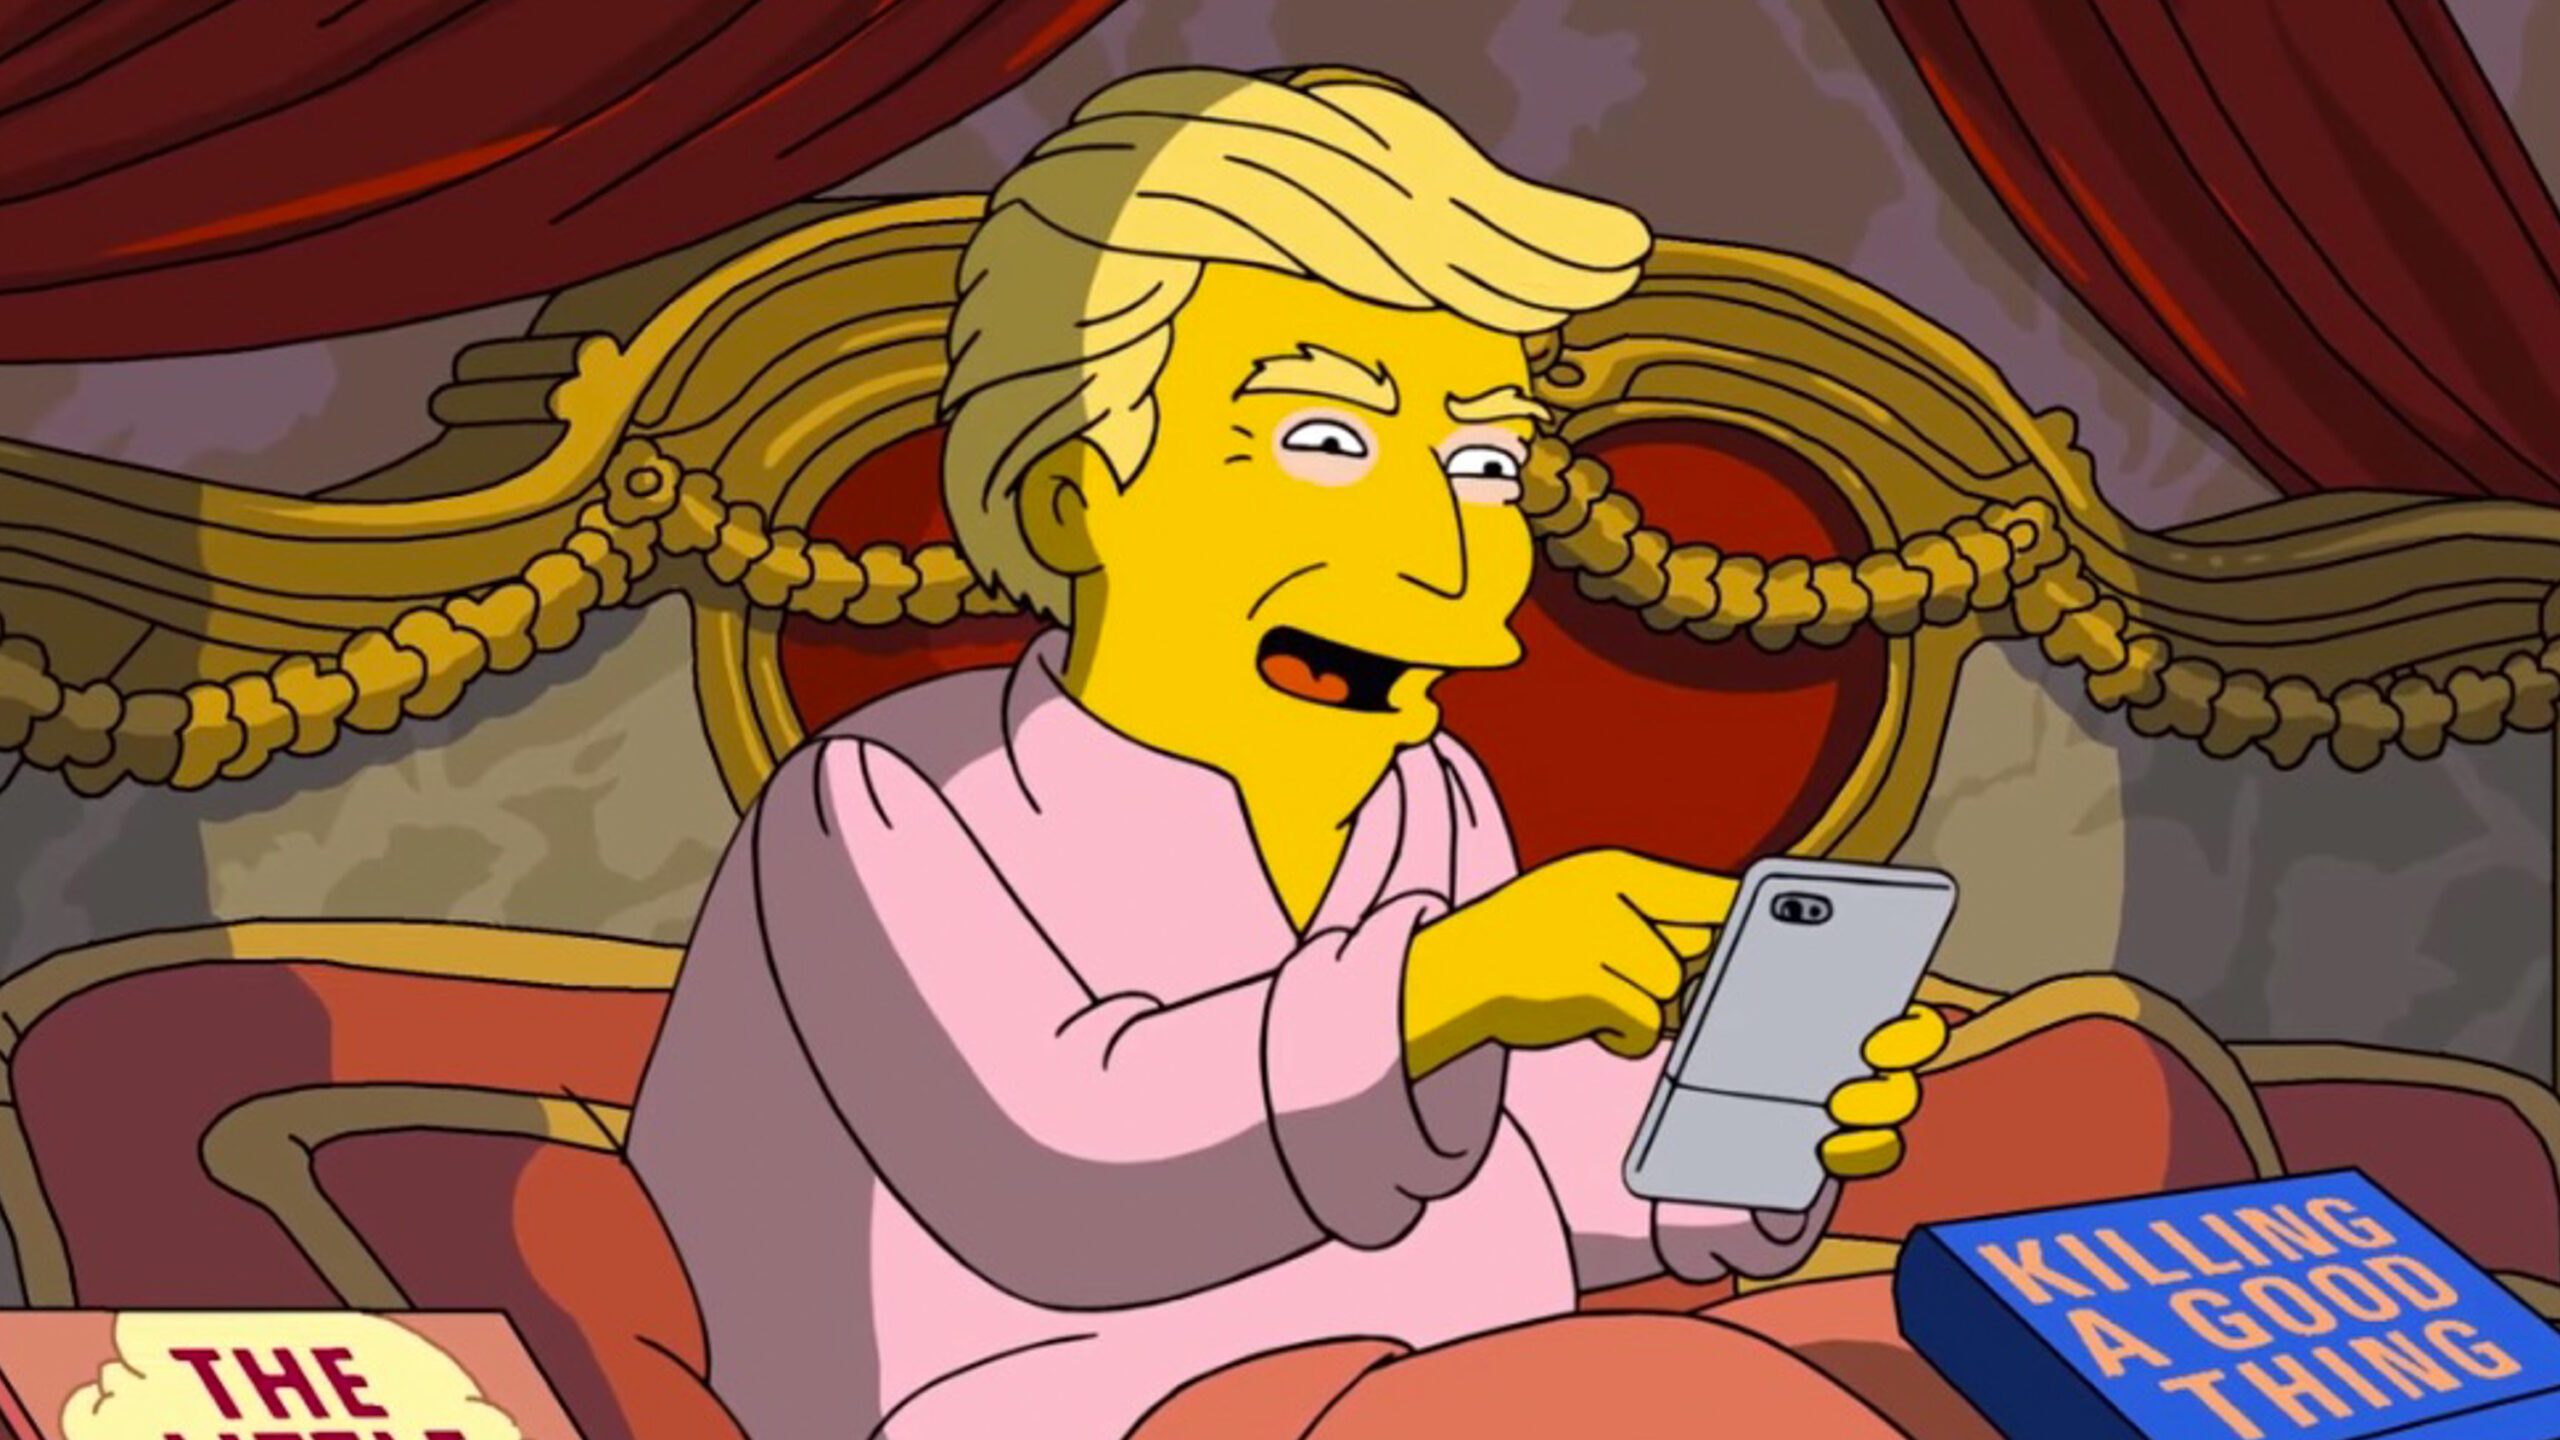 WATCH: ‘The Simpsons’ skewers Trump in ‘100 days’ episode